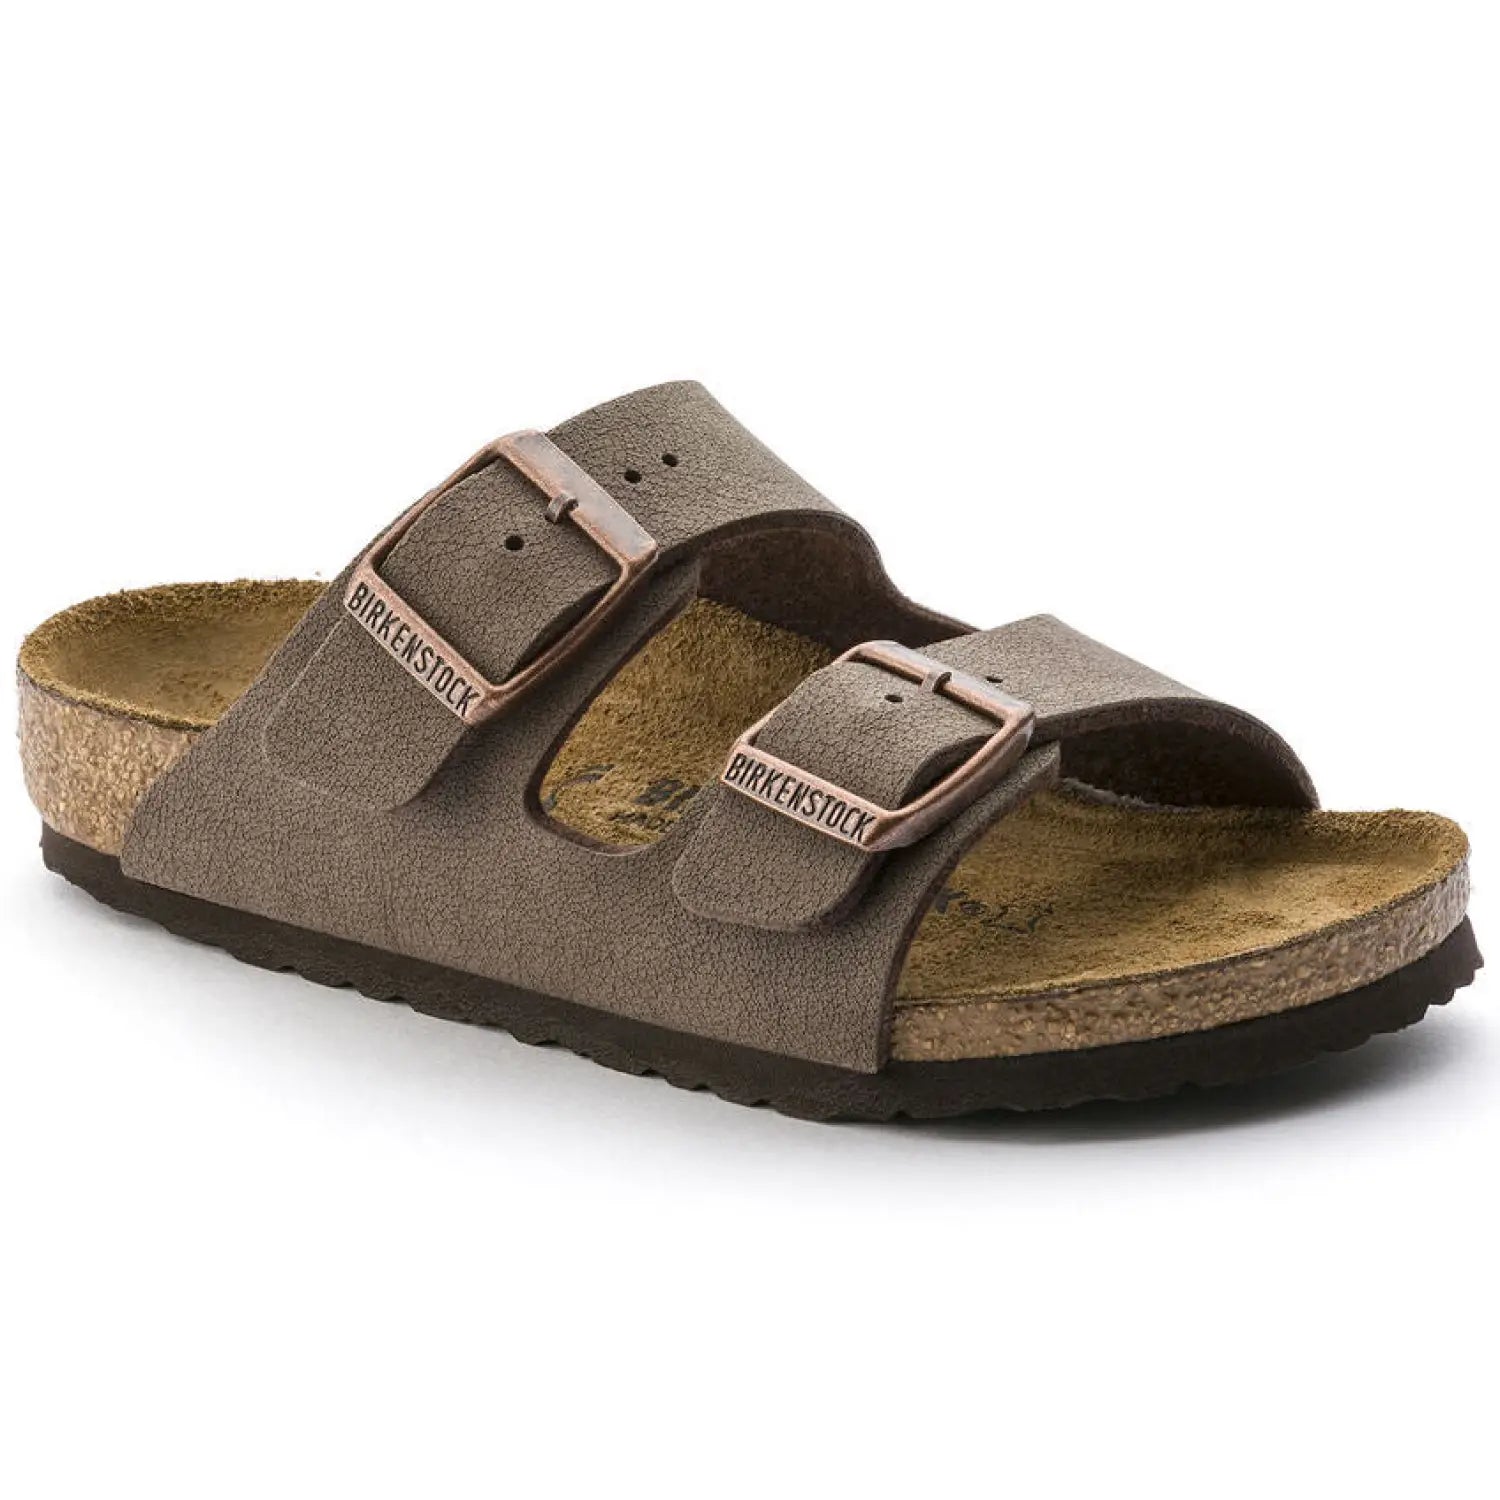 K's Arizona Birkibuc Sandal